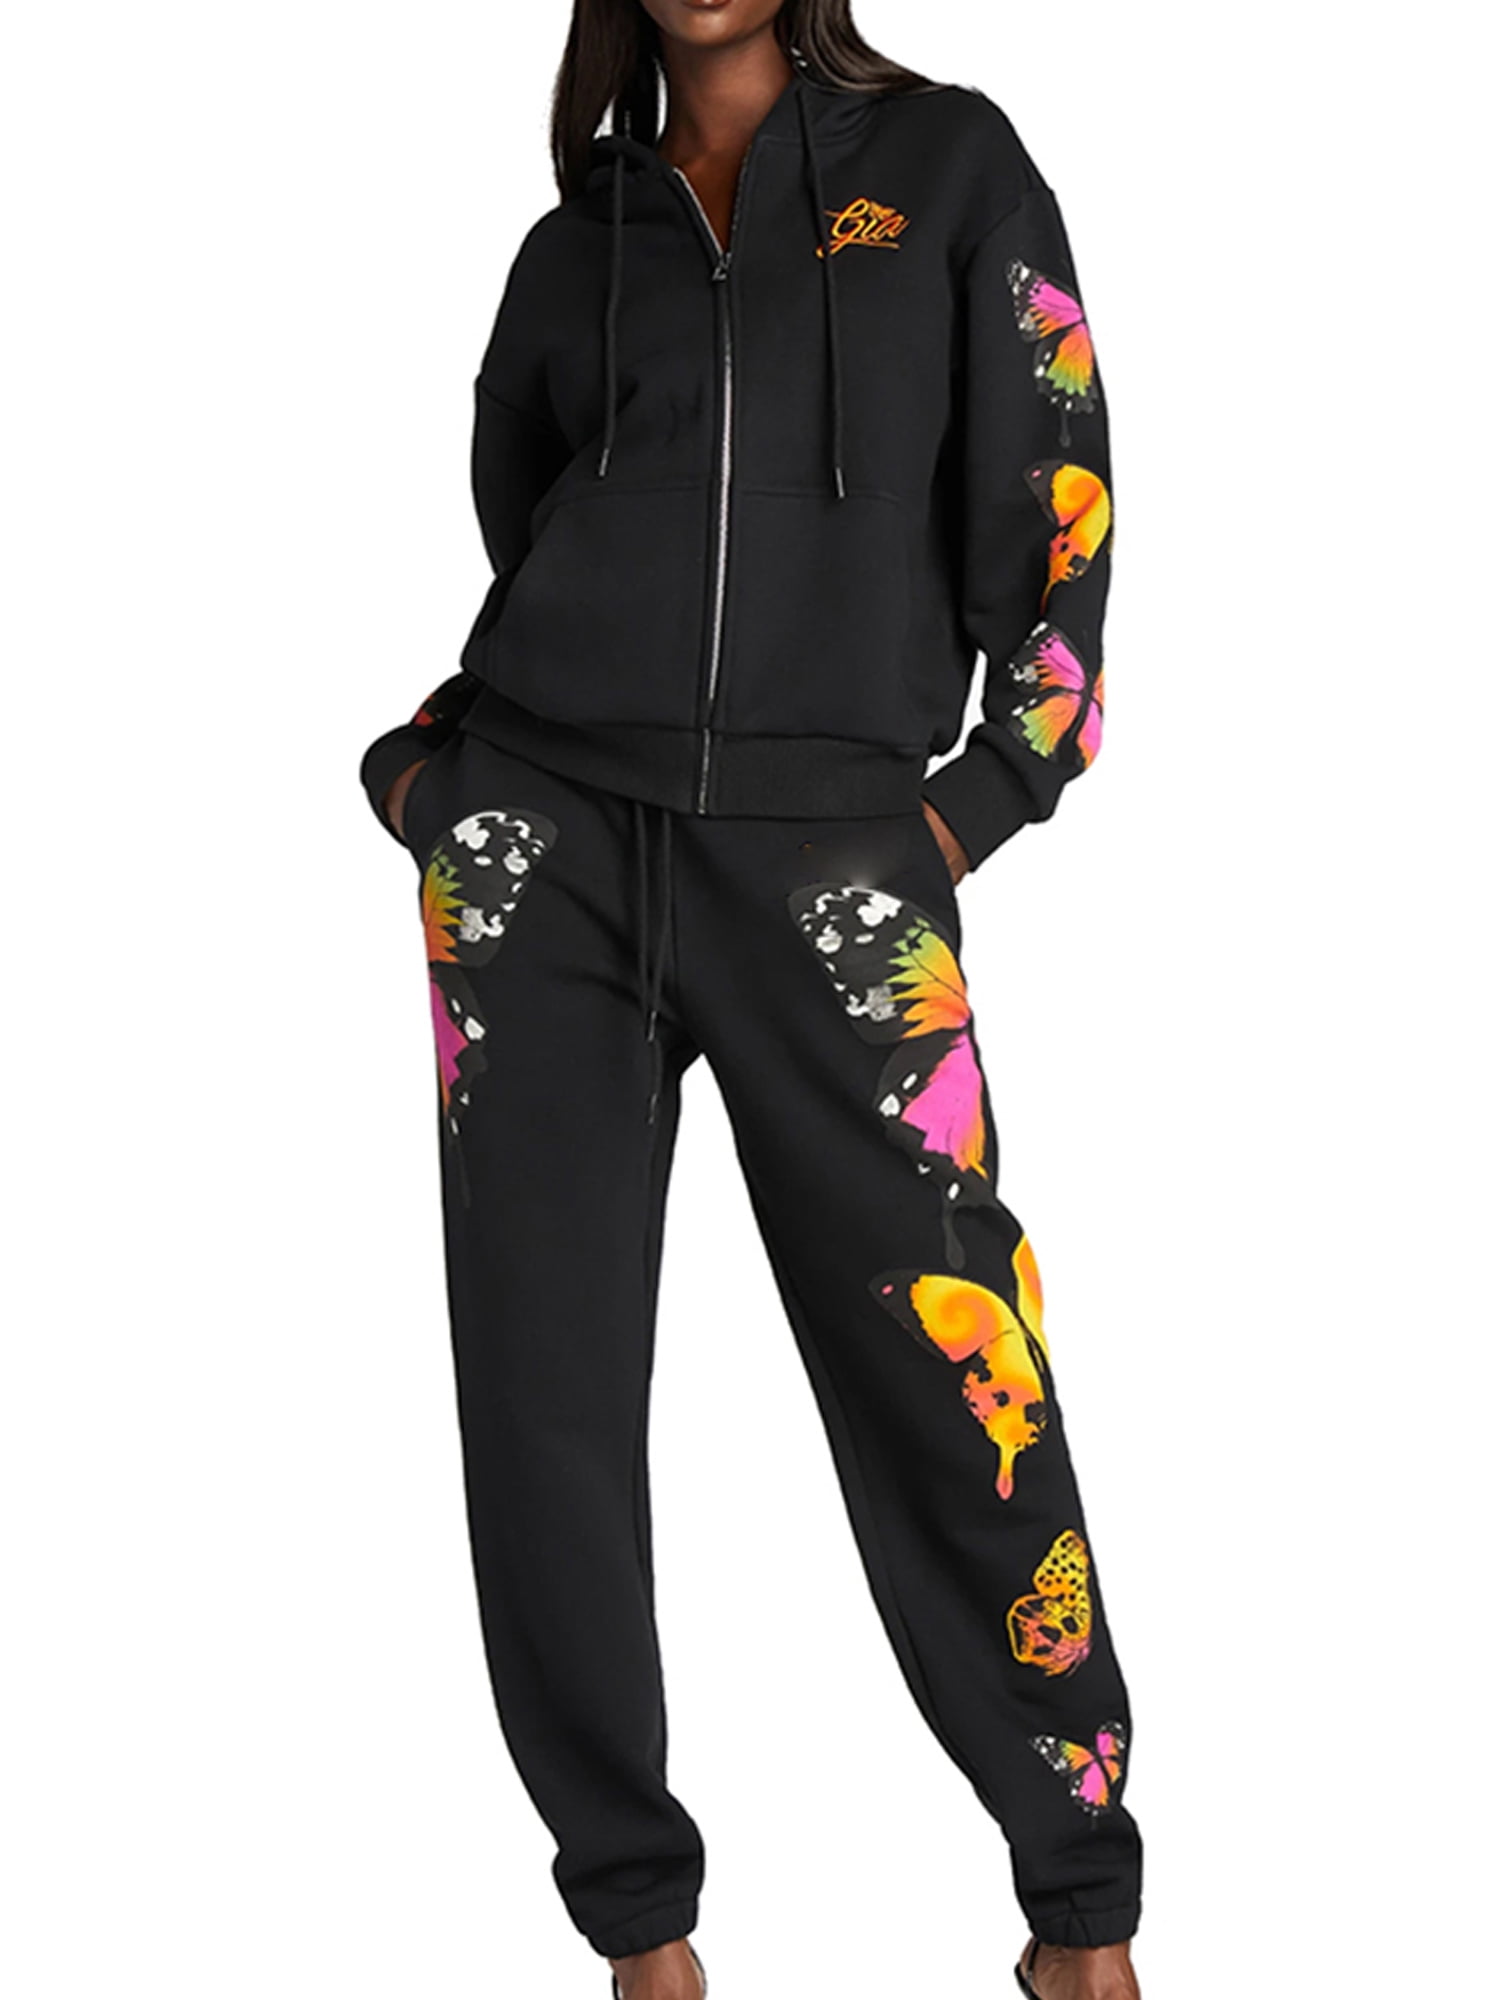 mlpeerw - Mlpeerw Womens Sport Suit Set Butterfly Print Hooded Top Pants  suits - Walmart.com - Walmart.com